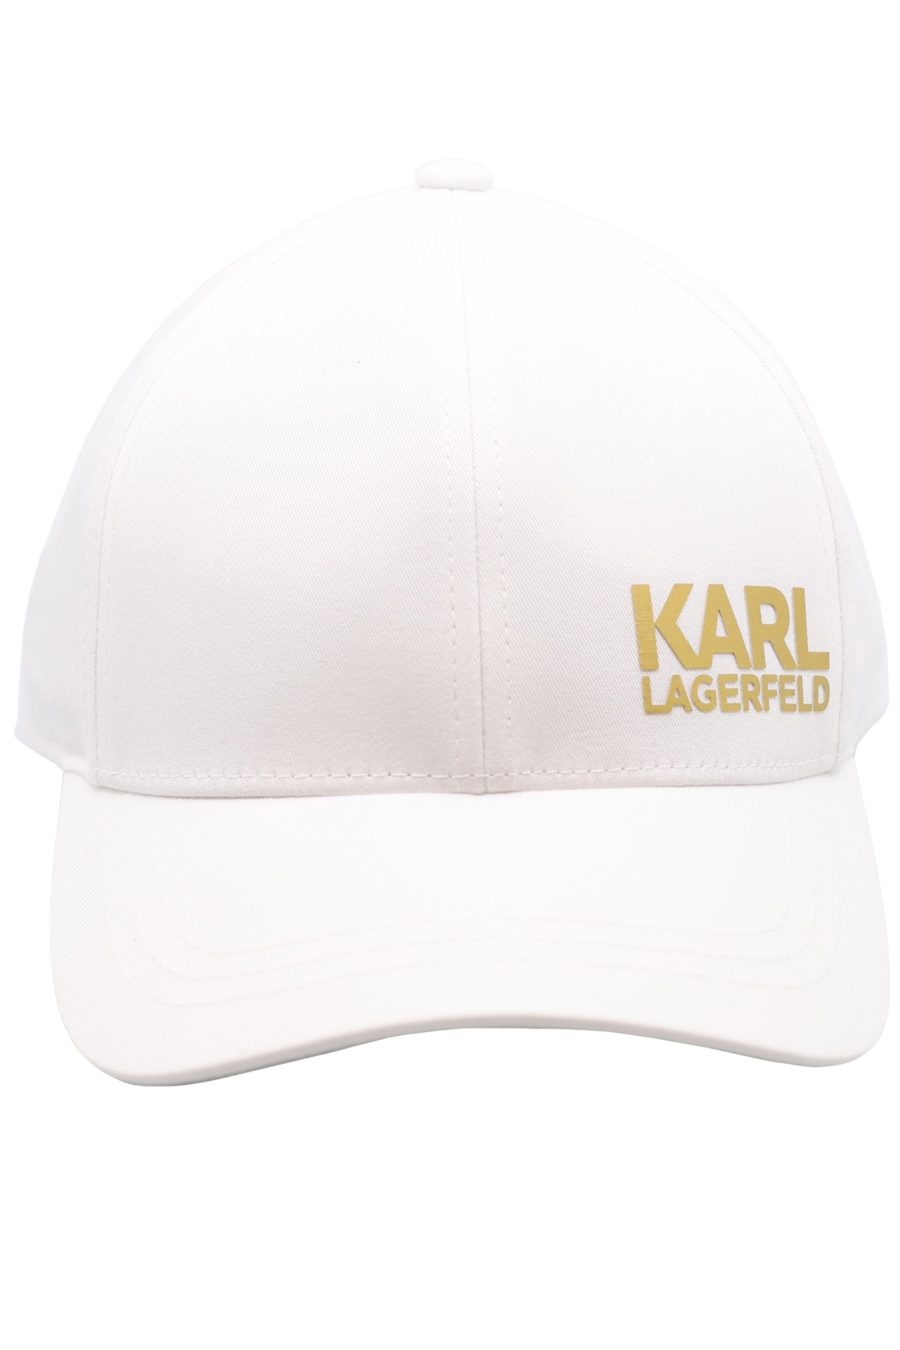 Gorra blanca con logo dorado "Karl Legerfeld" - 49cf6fa7d1f87a3d39db31d609bdb6cf443a88e4